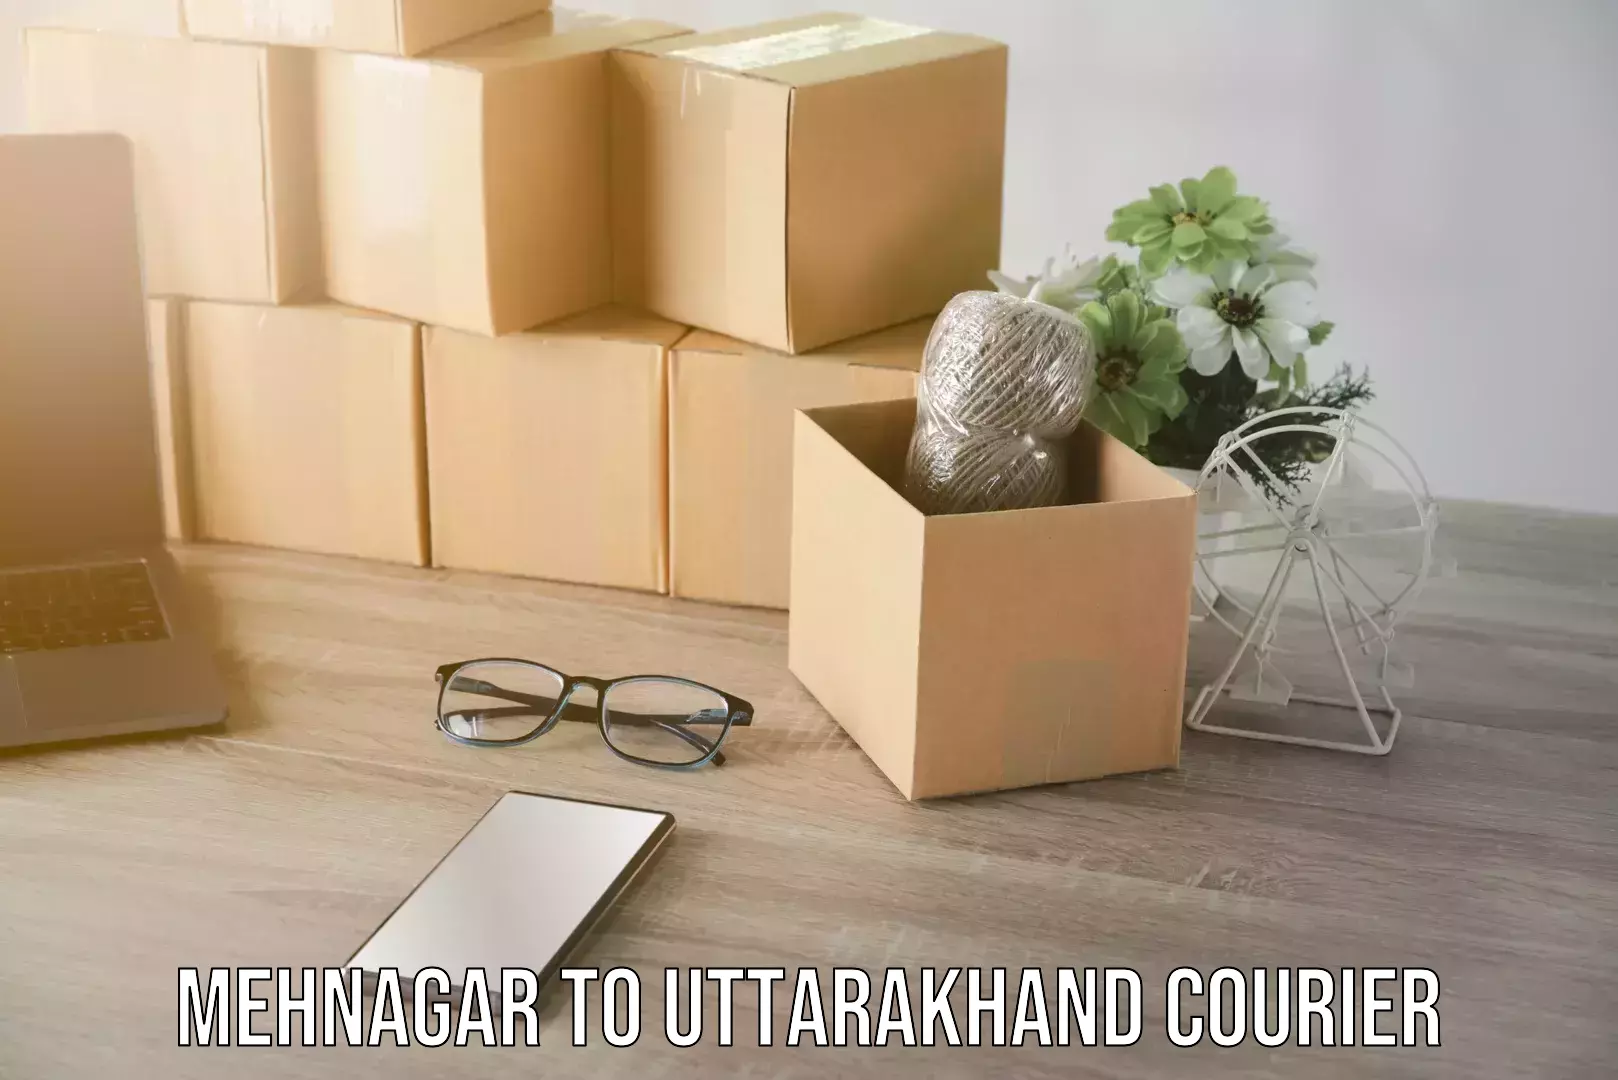 Trusted moving company Mehnagar to Uttarakhand